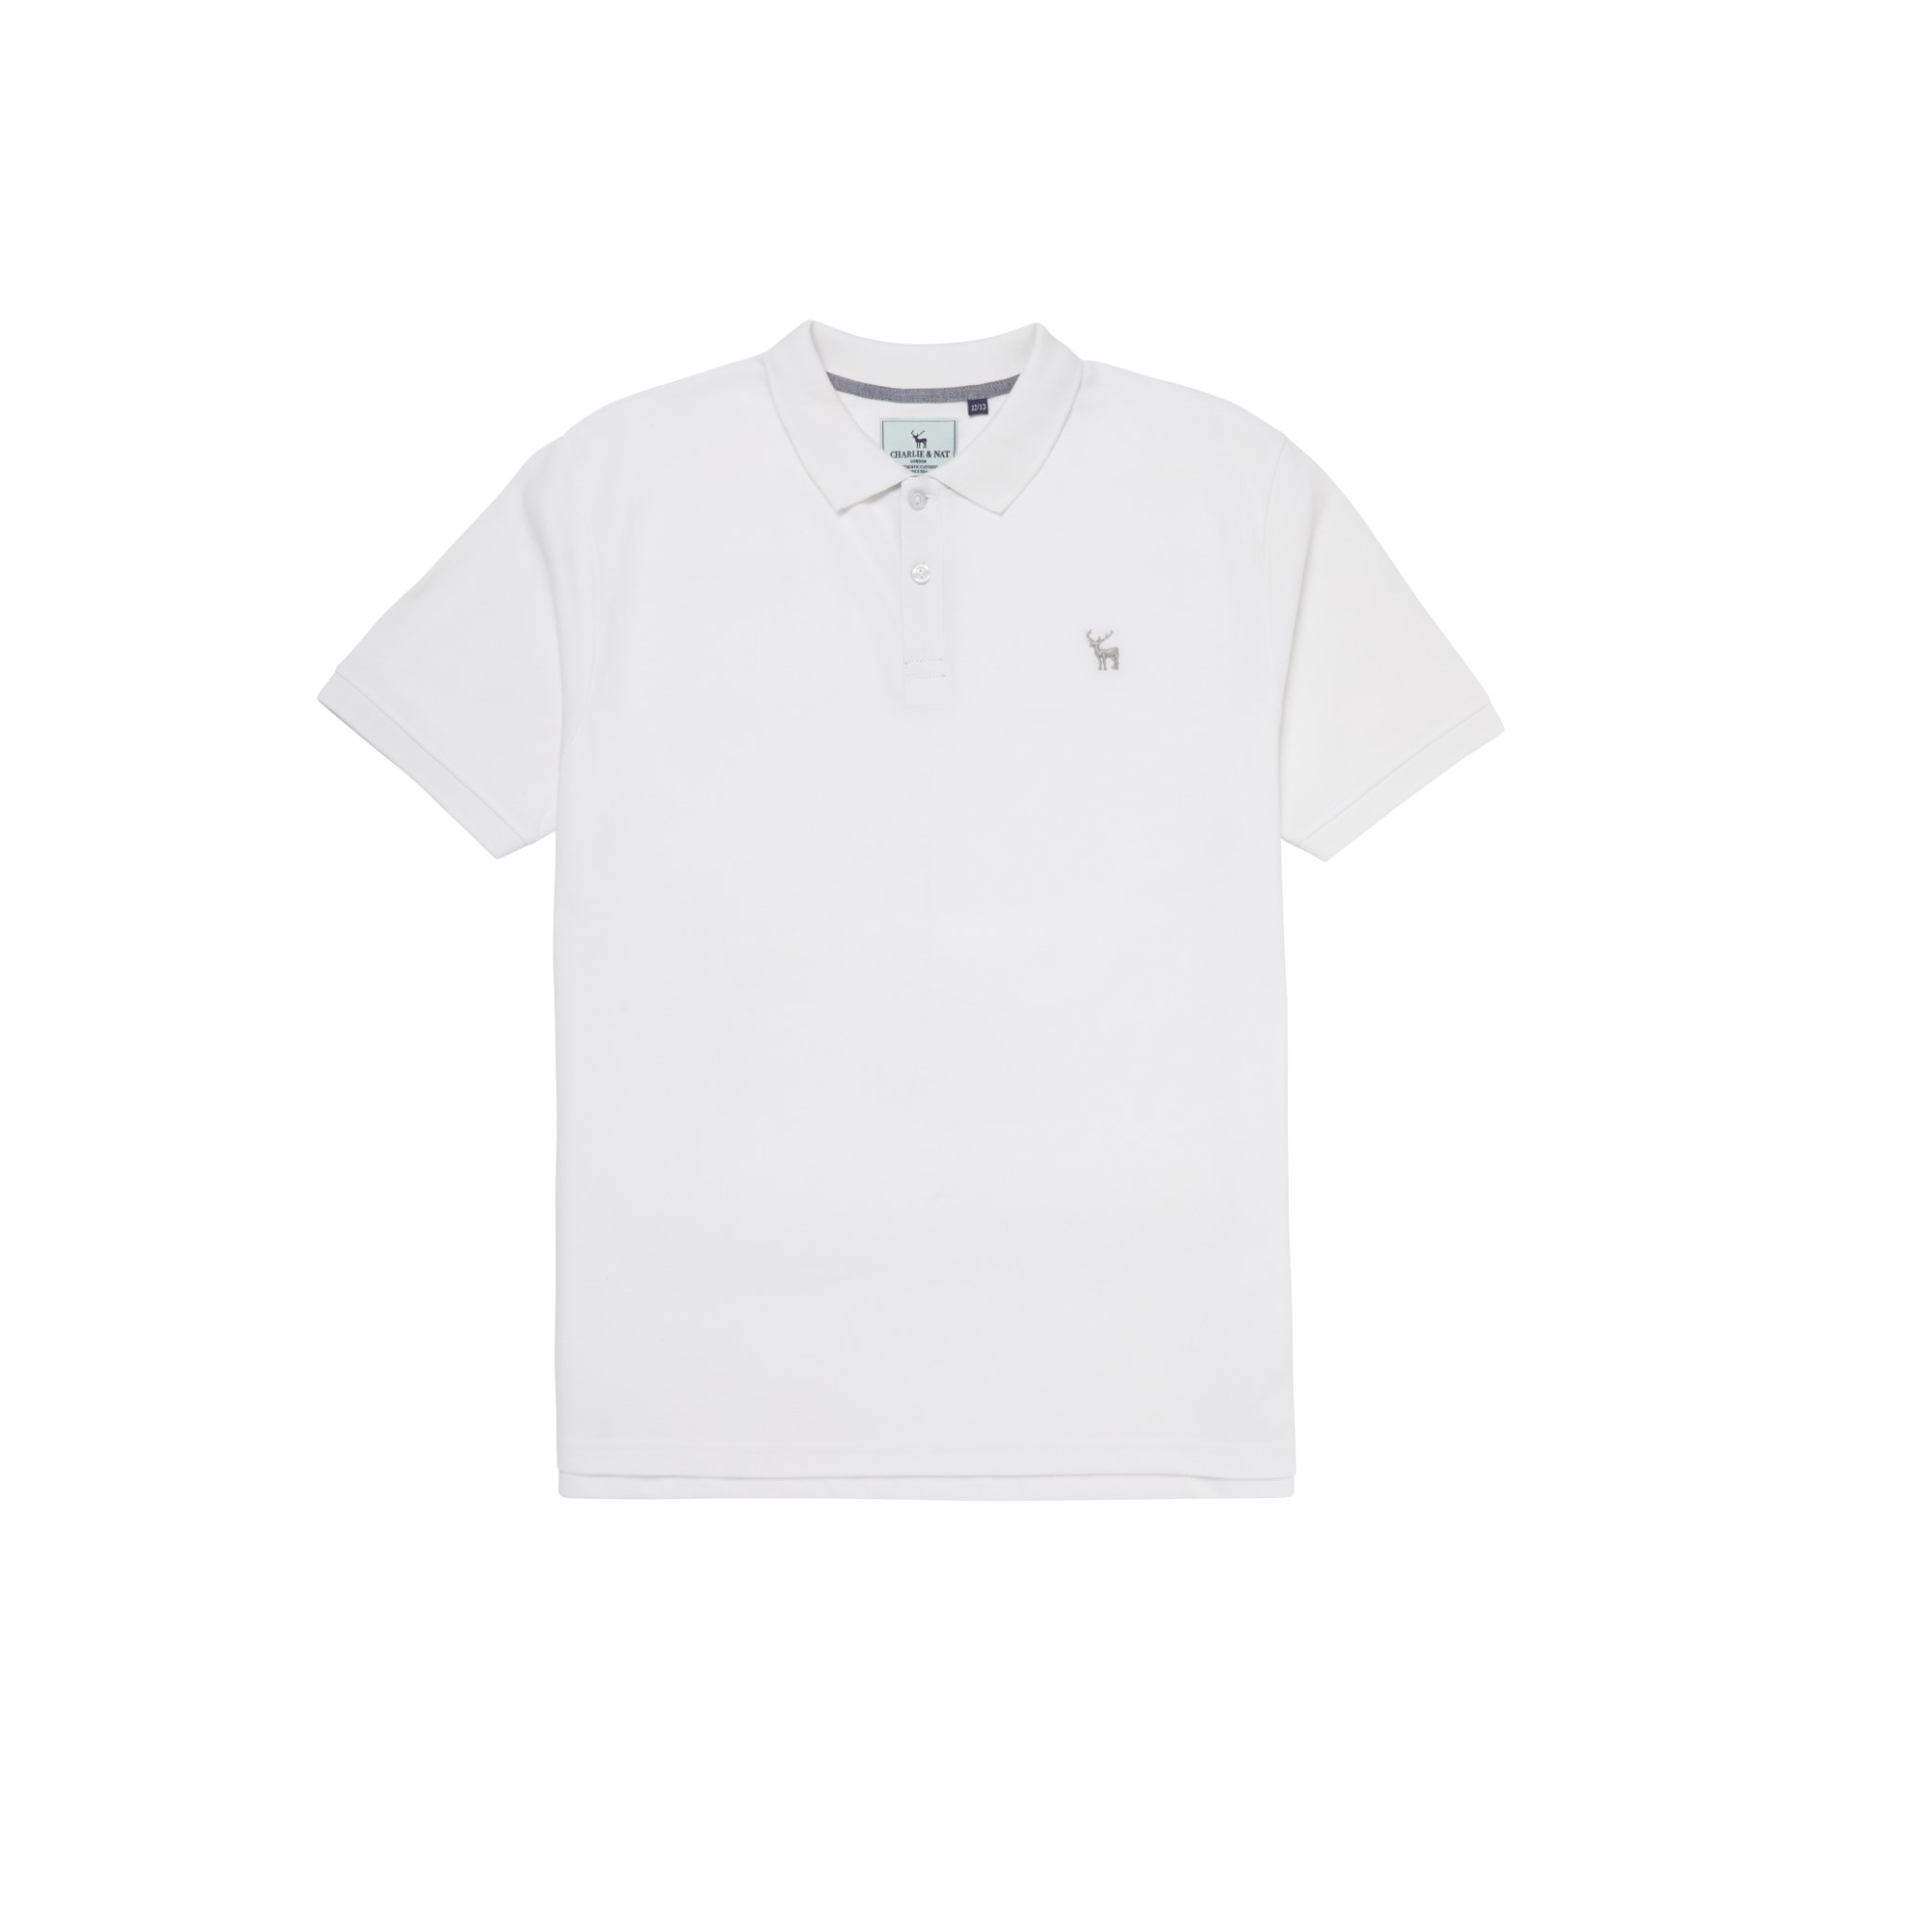 White Boys Plus Size Sturdy Fit Essential Cotton Polo Shirt 32